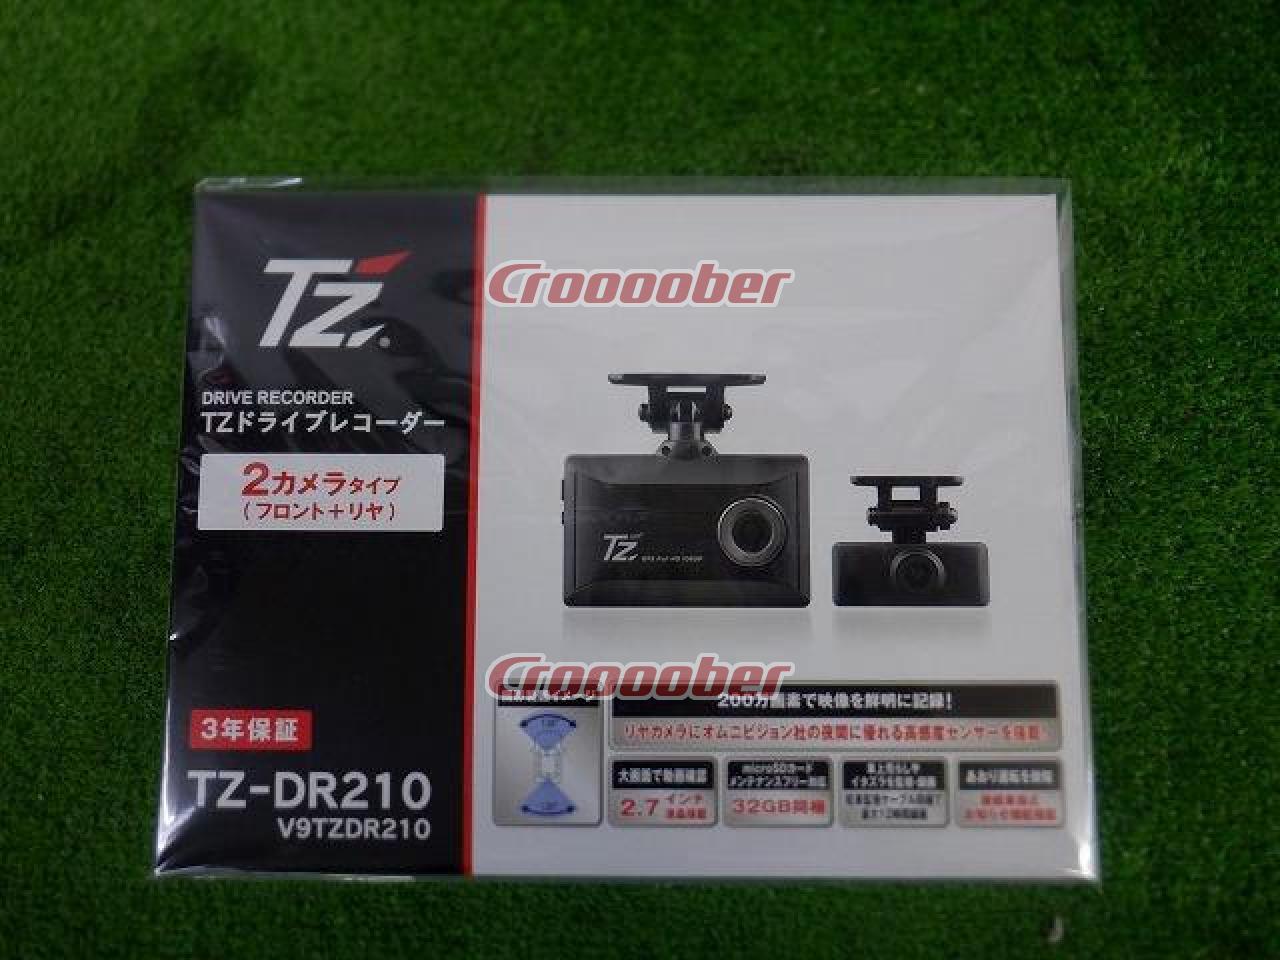 △ Price Reduced! T'z TZ-DR210 | Drive Recorder | Croooober